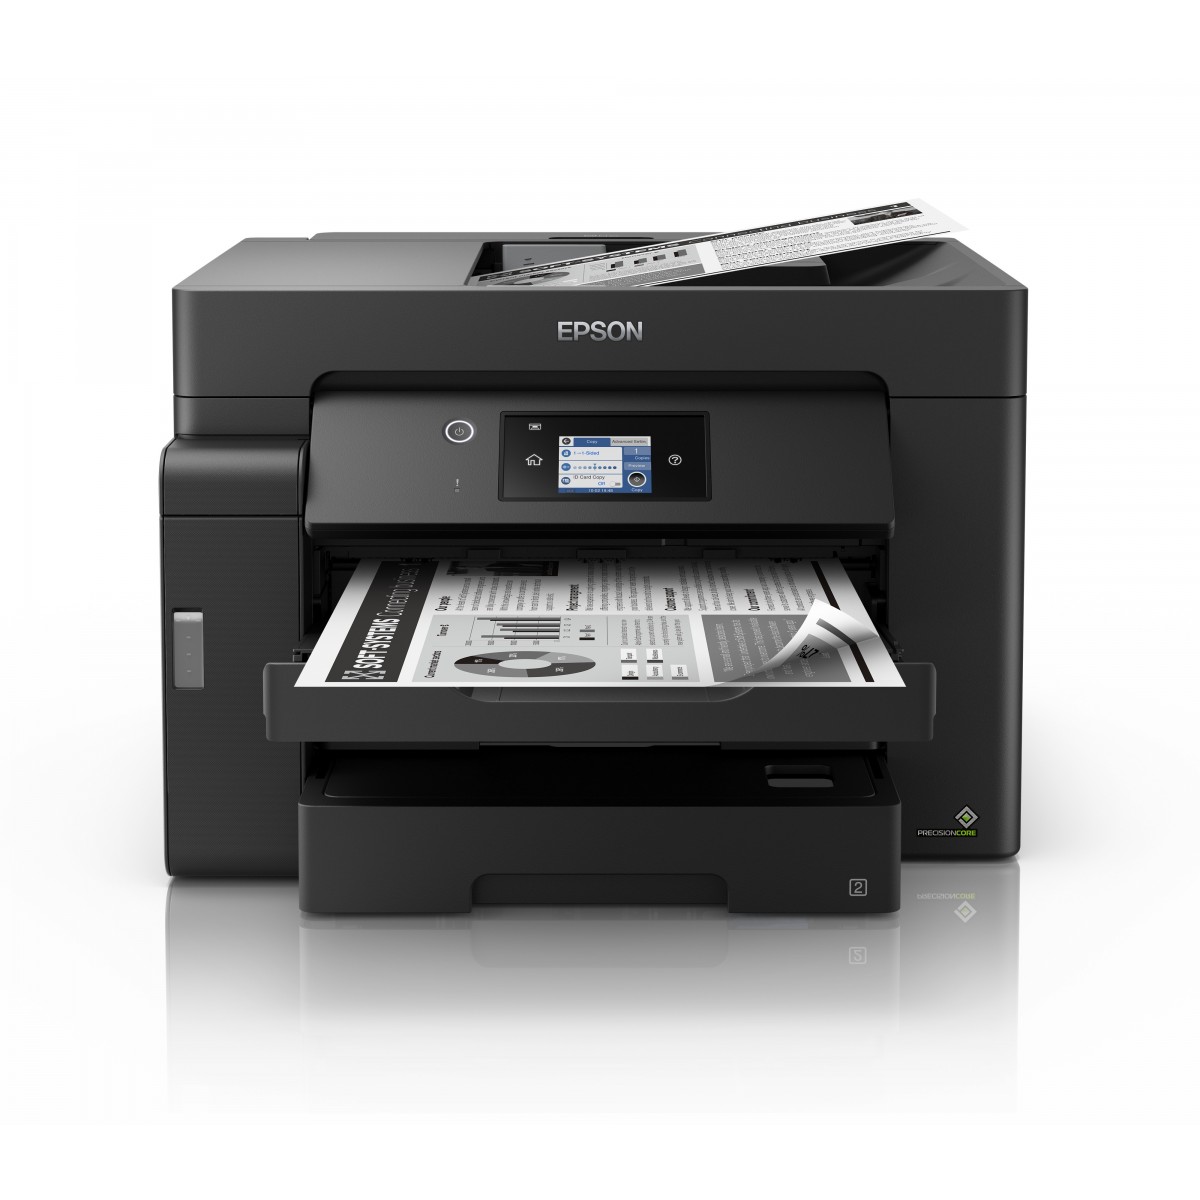 Epson M15140 Multifunkcional black-white inkjet A3+ printer